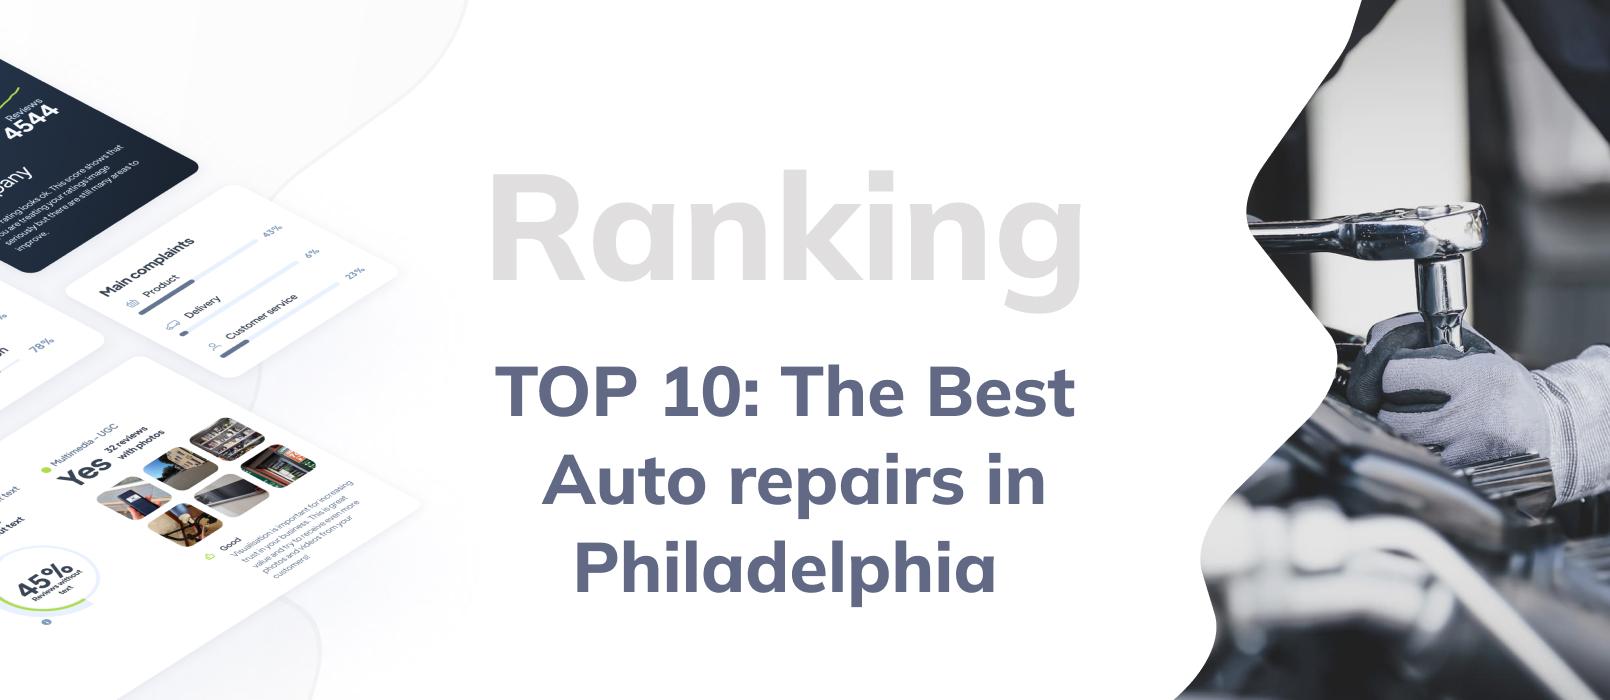 Auto repairs in Philadelphia - ranking TOP 10